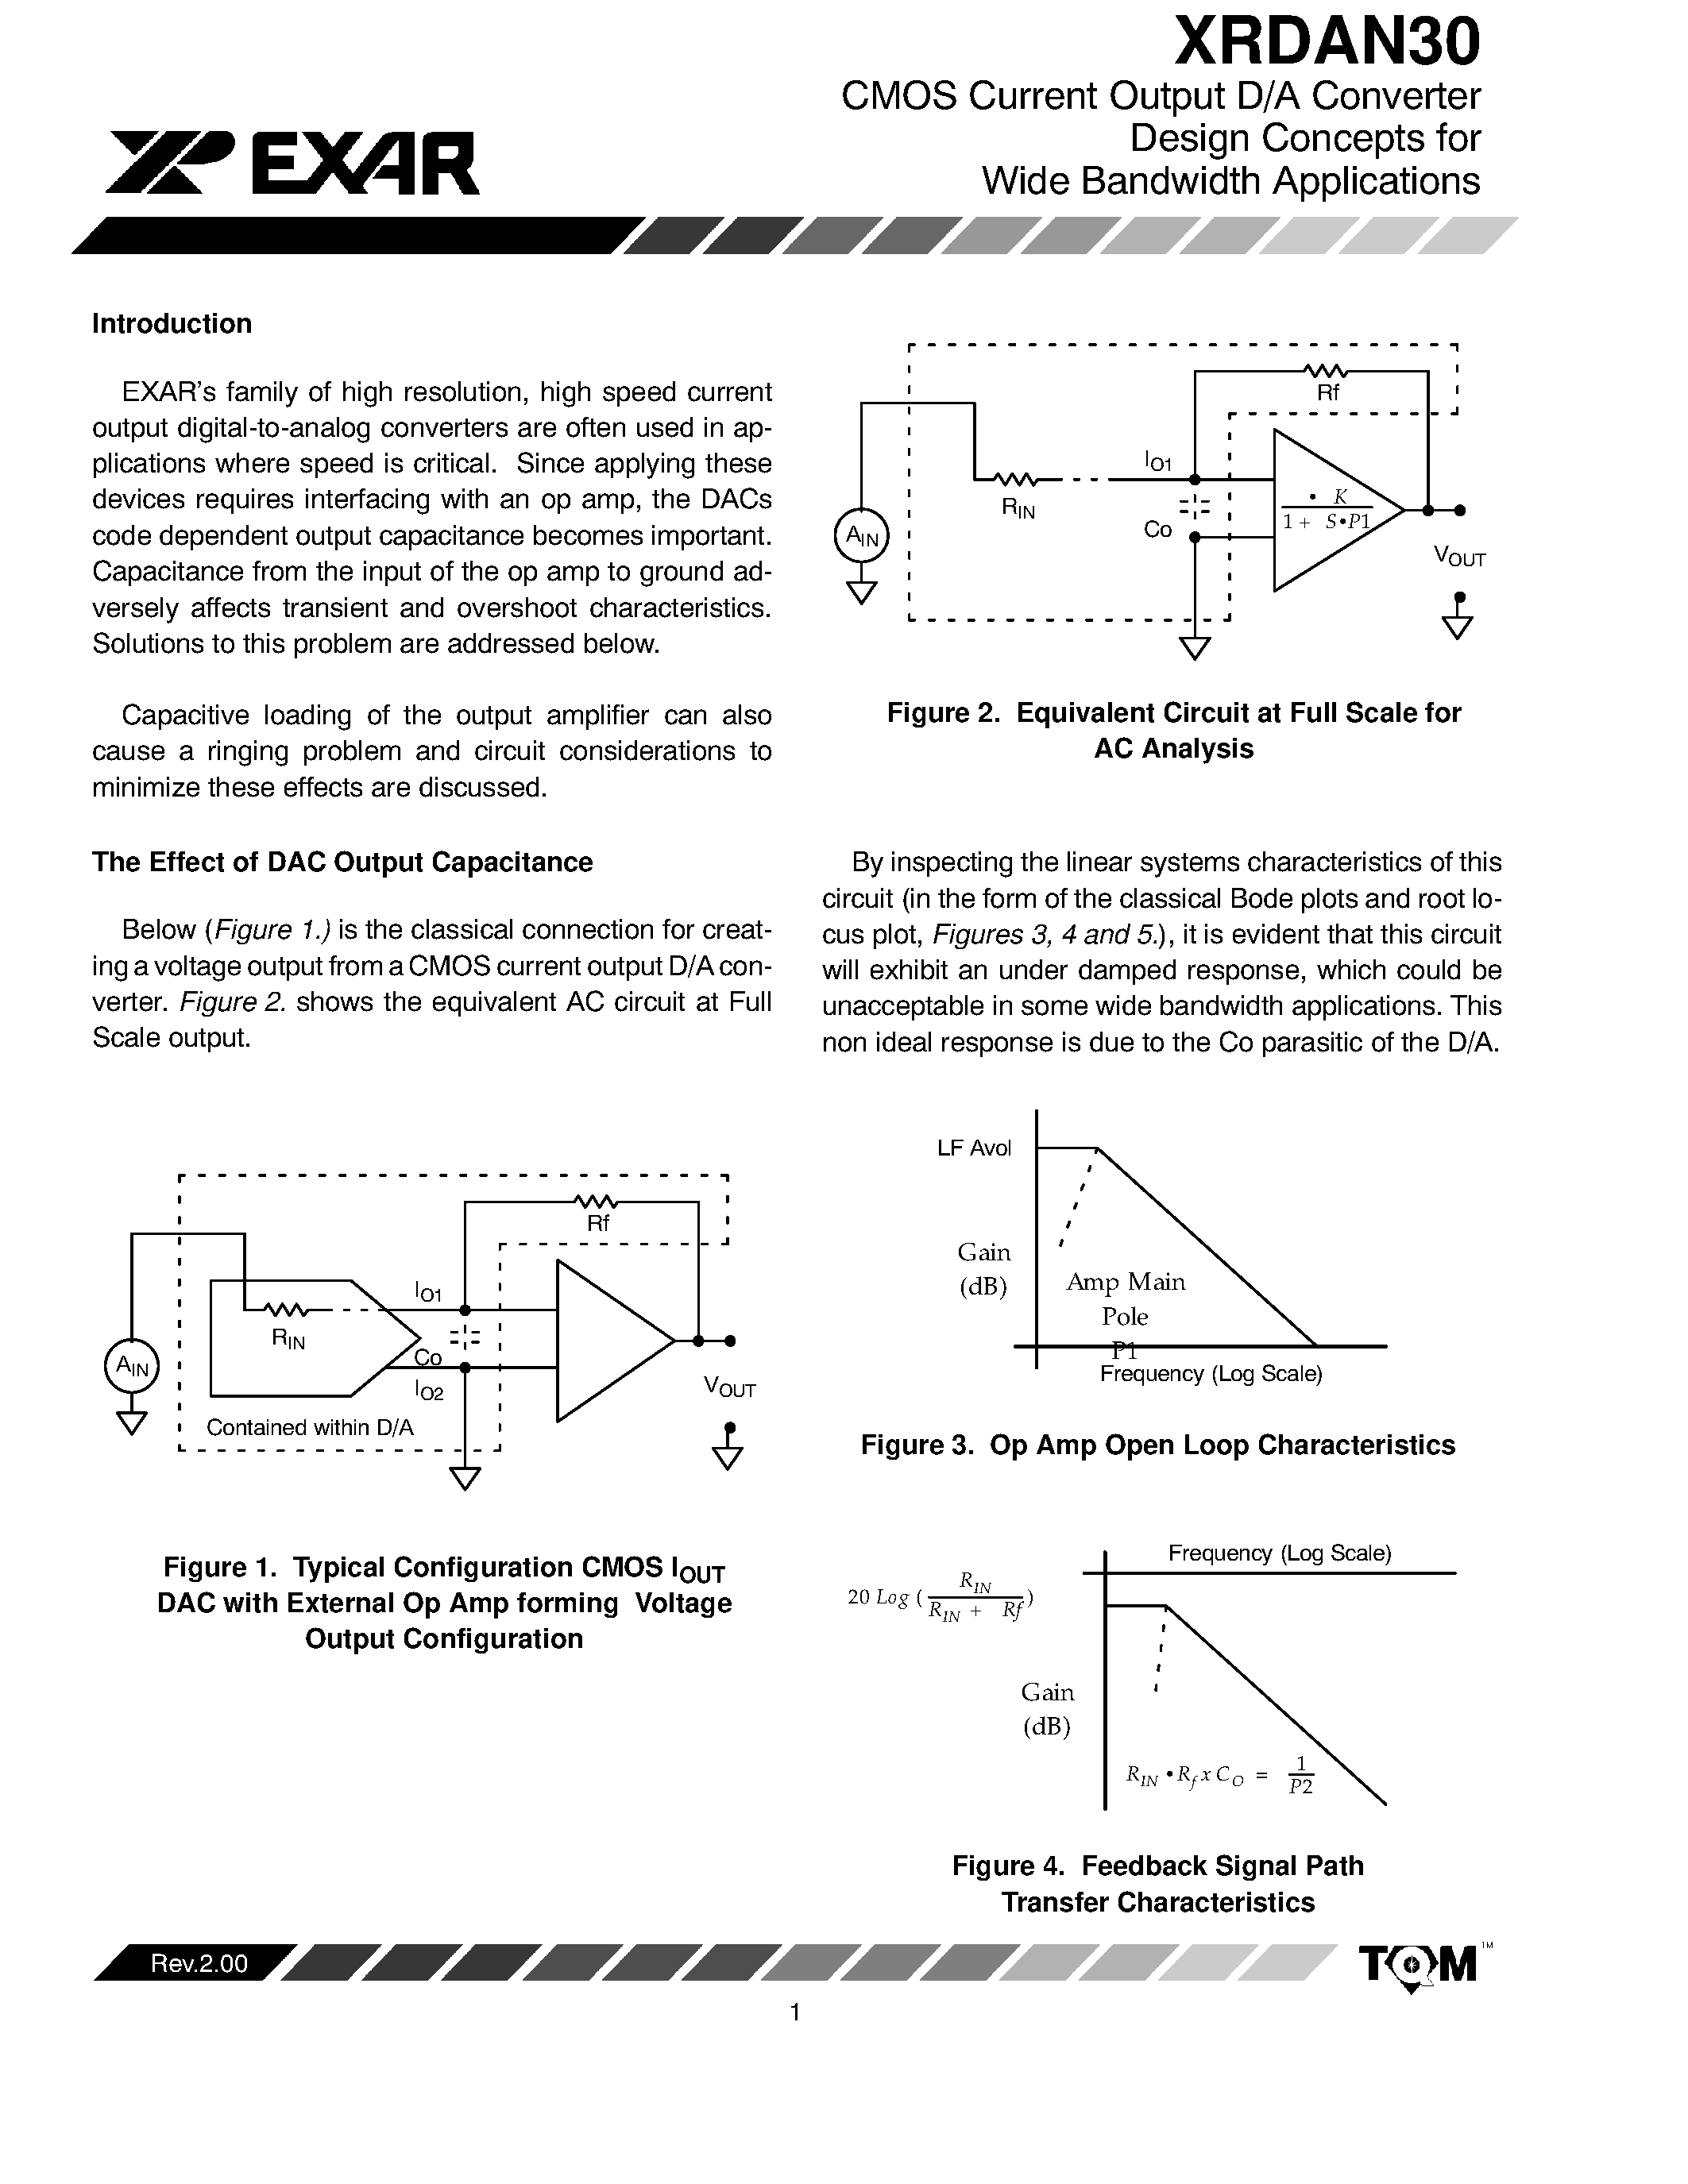 Datasheet XRDAN30 - CMOS Current Output D/A Converter Design Concepts page 1